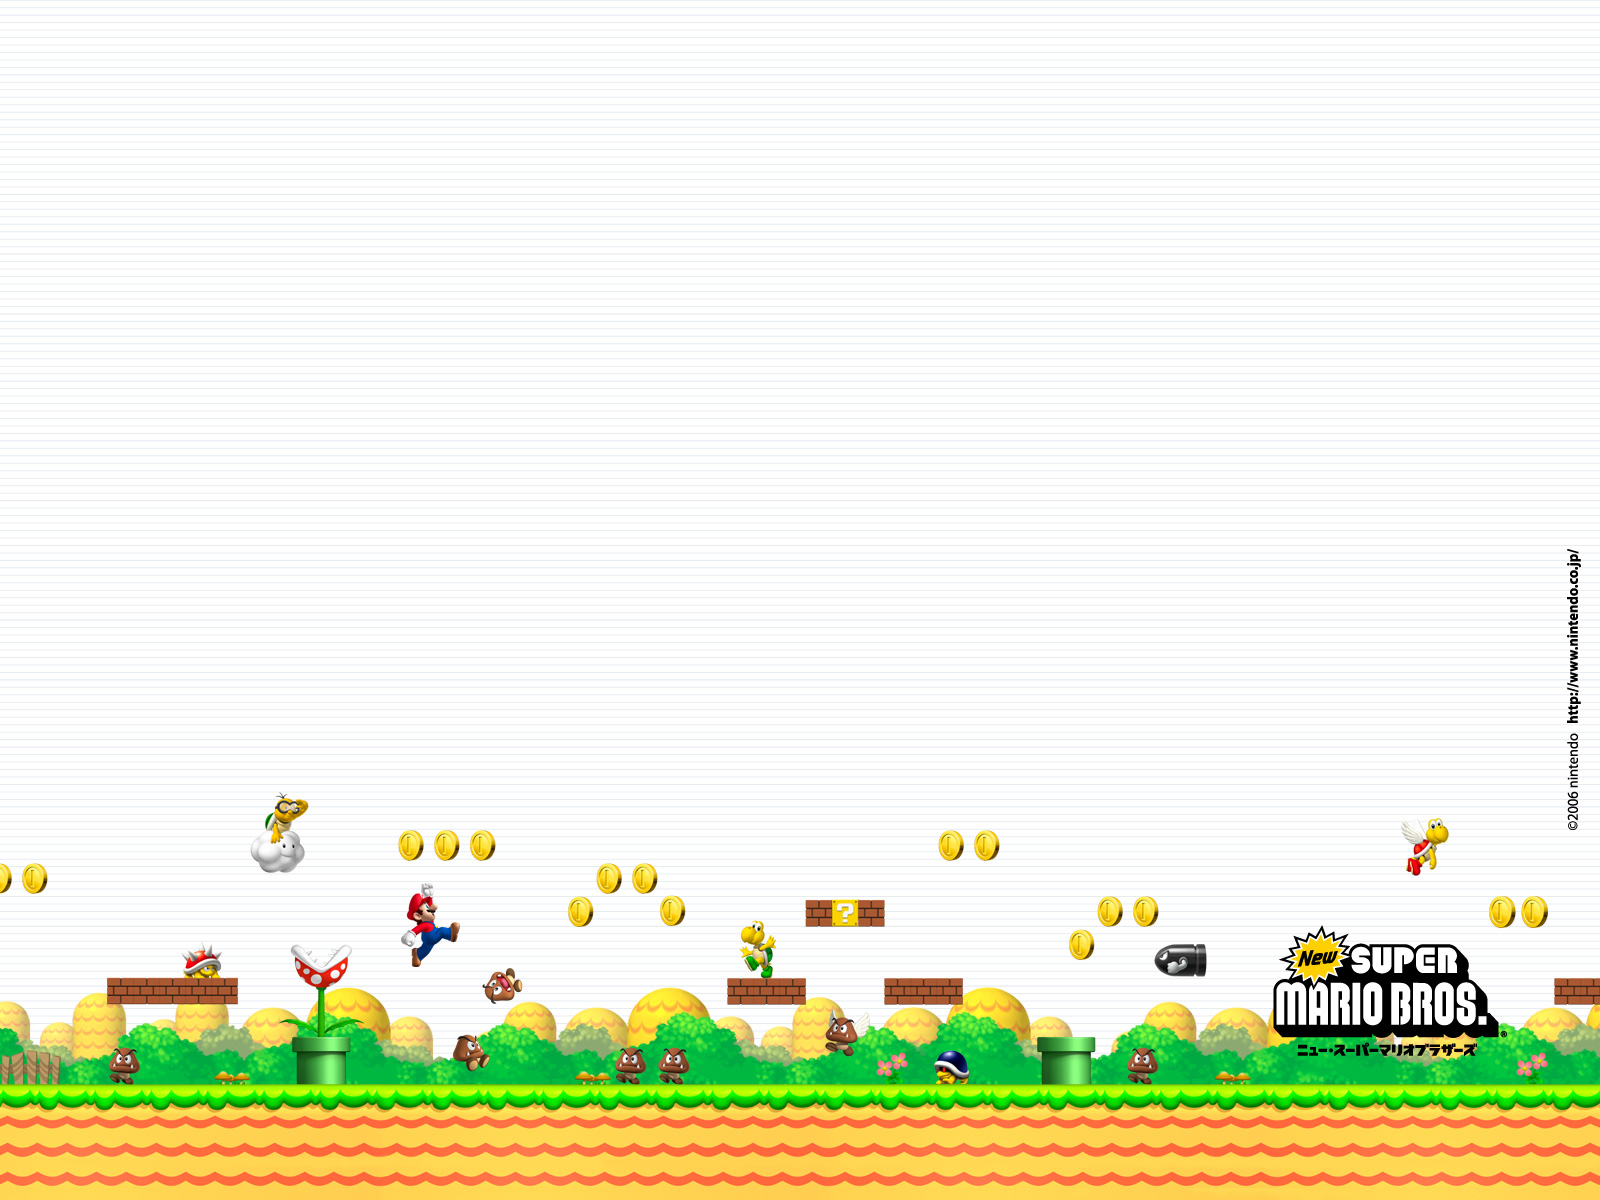 New Super Mario Bros. Background - Mario Photo (37817212) - Fanpop